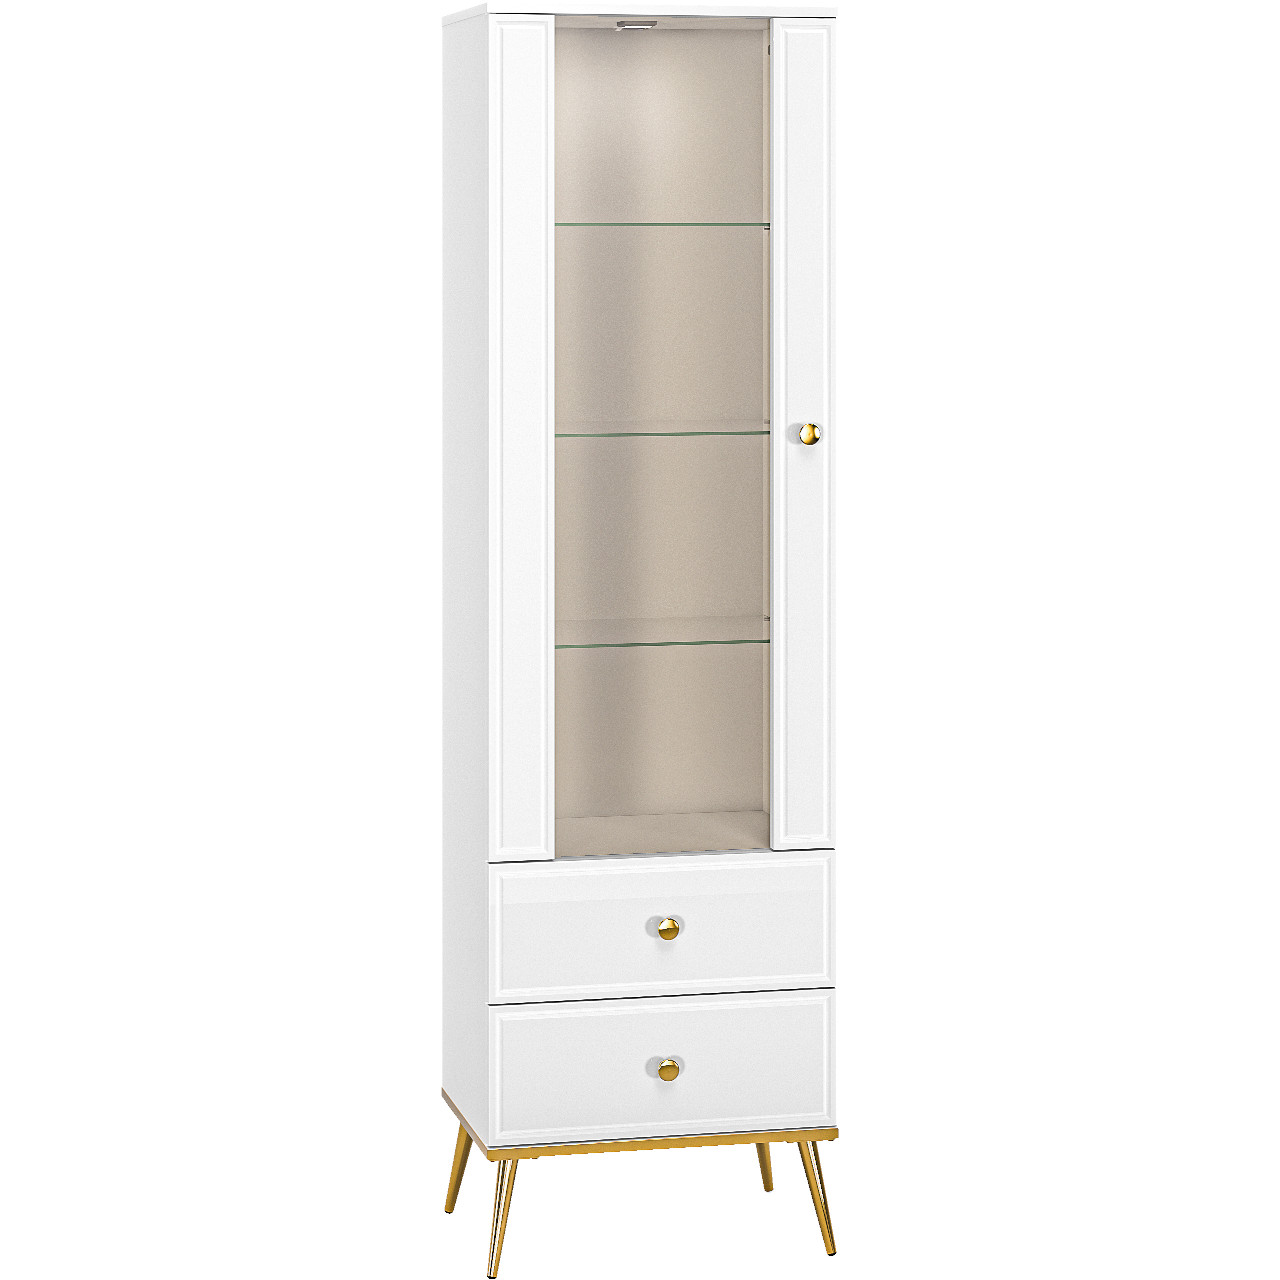 Display Cabinet GOLDEN GL02 white gloss